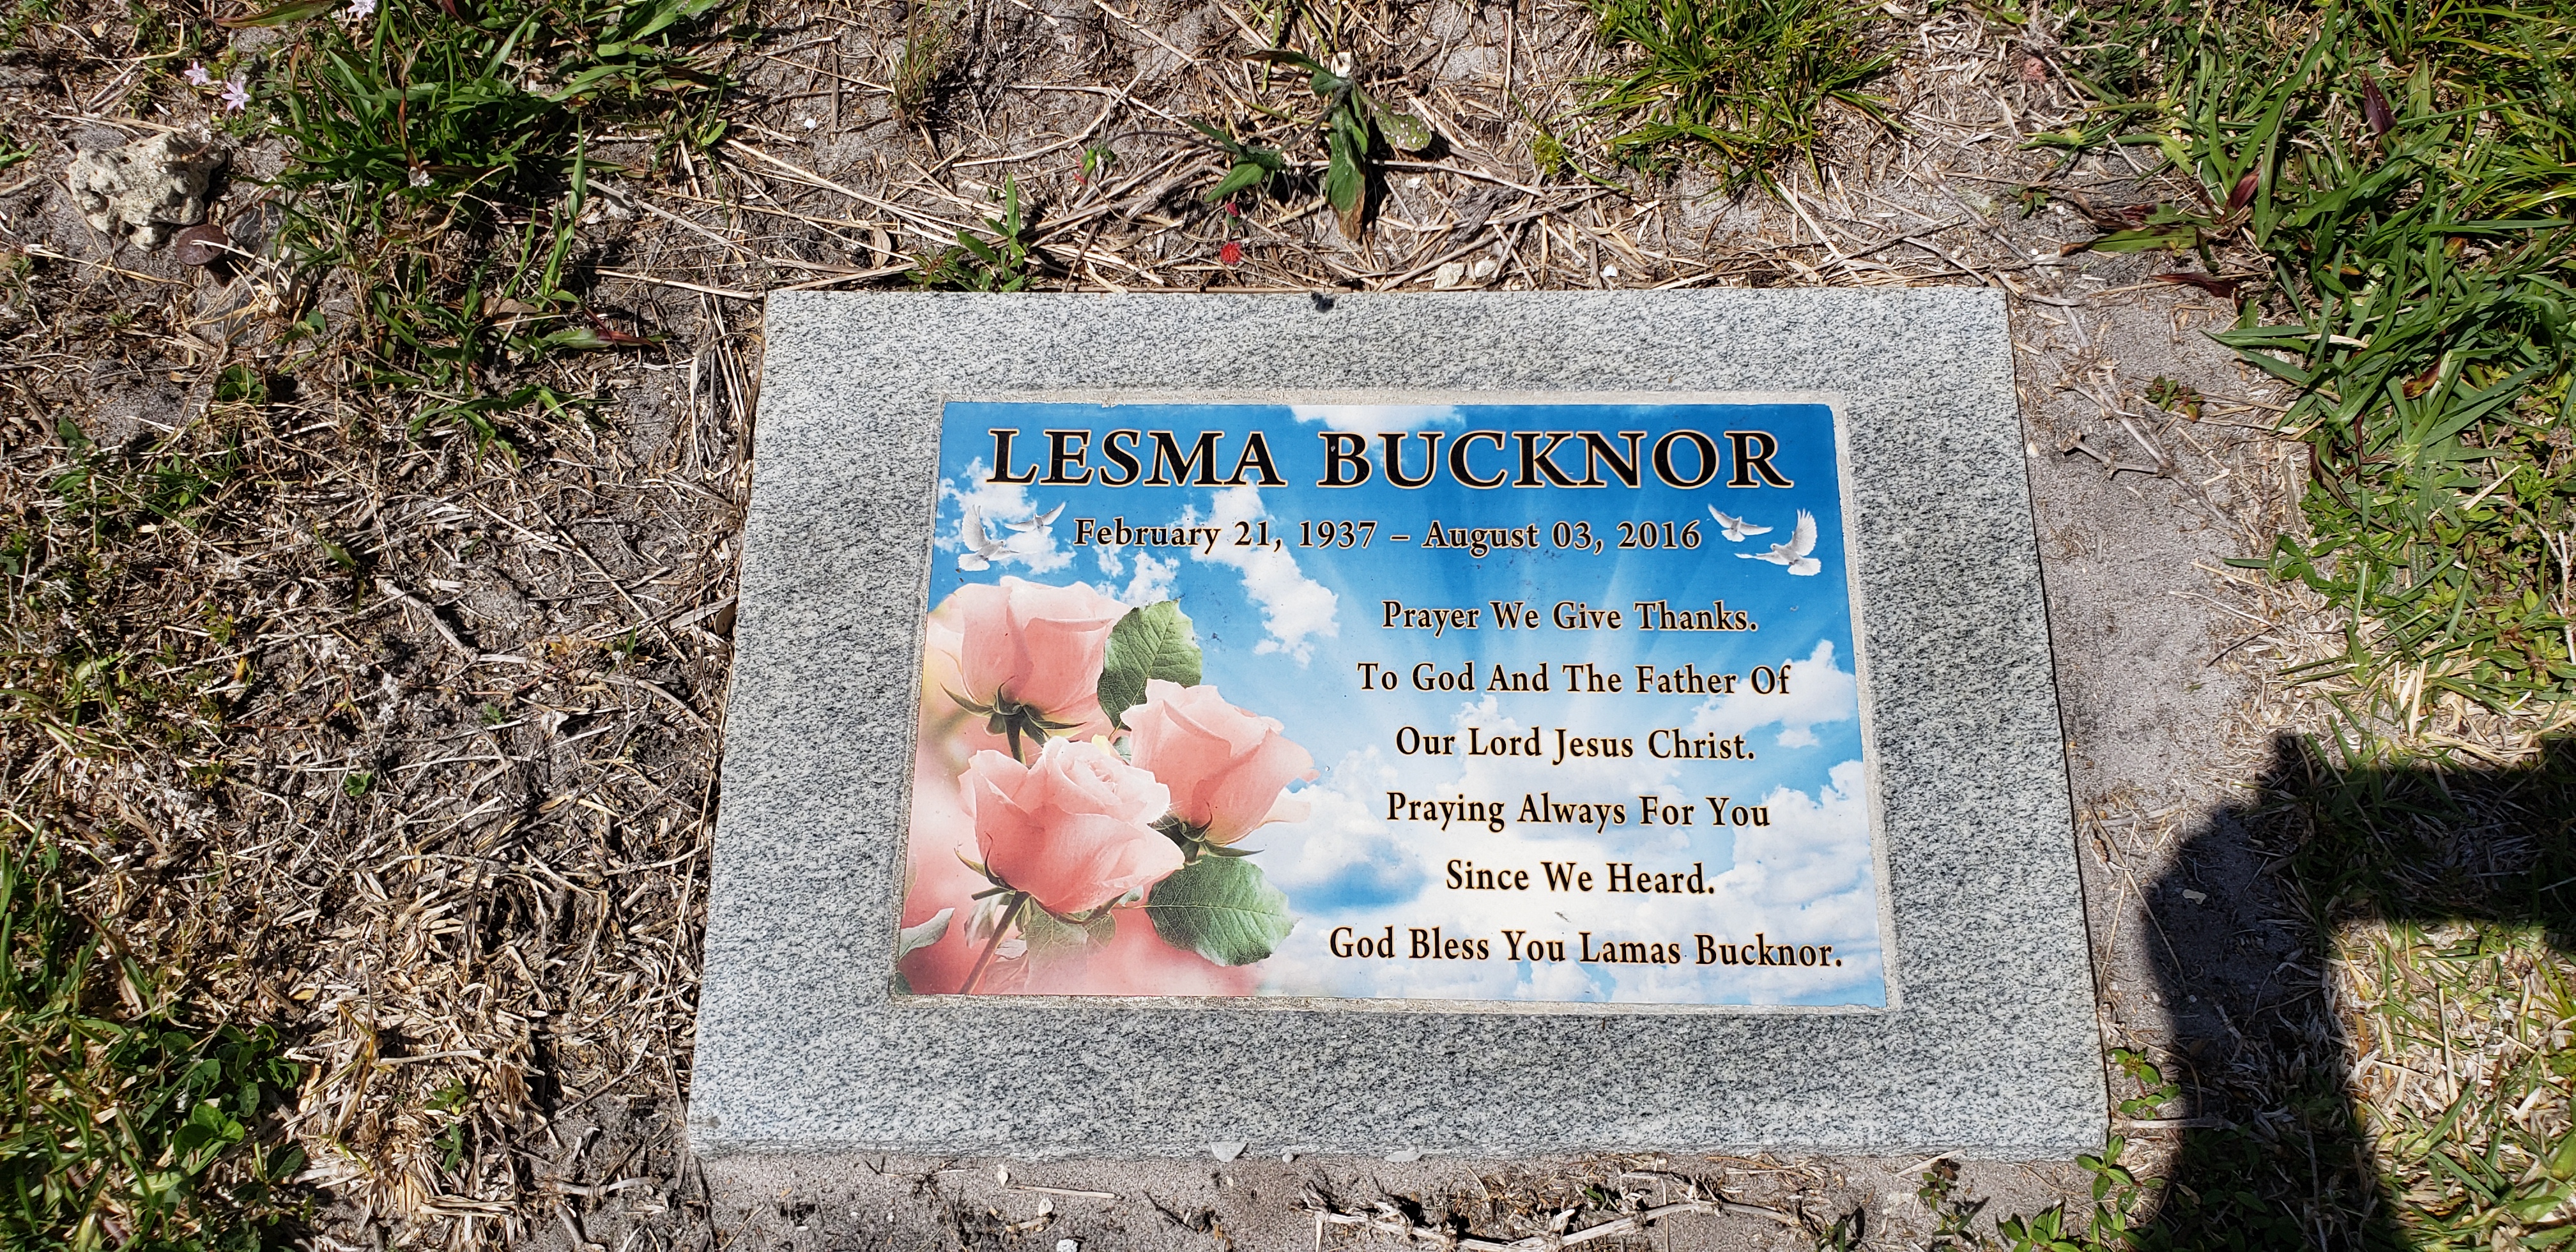 Lesma Bucknor